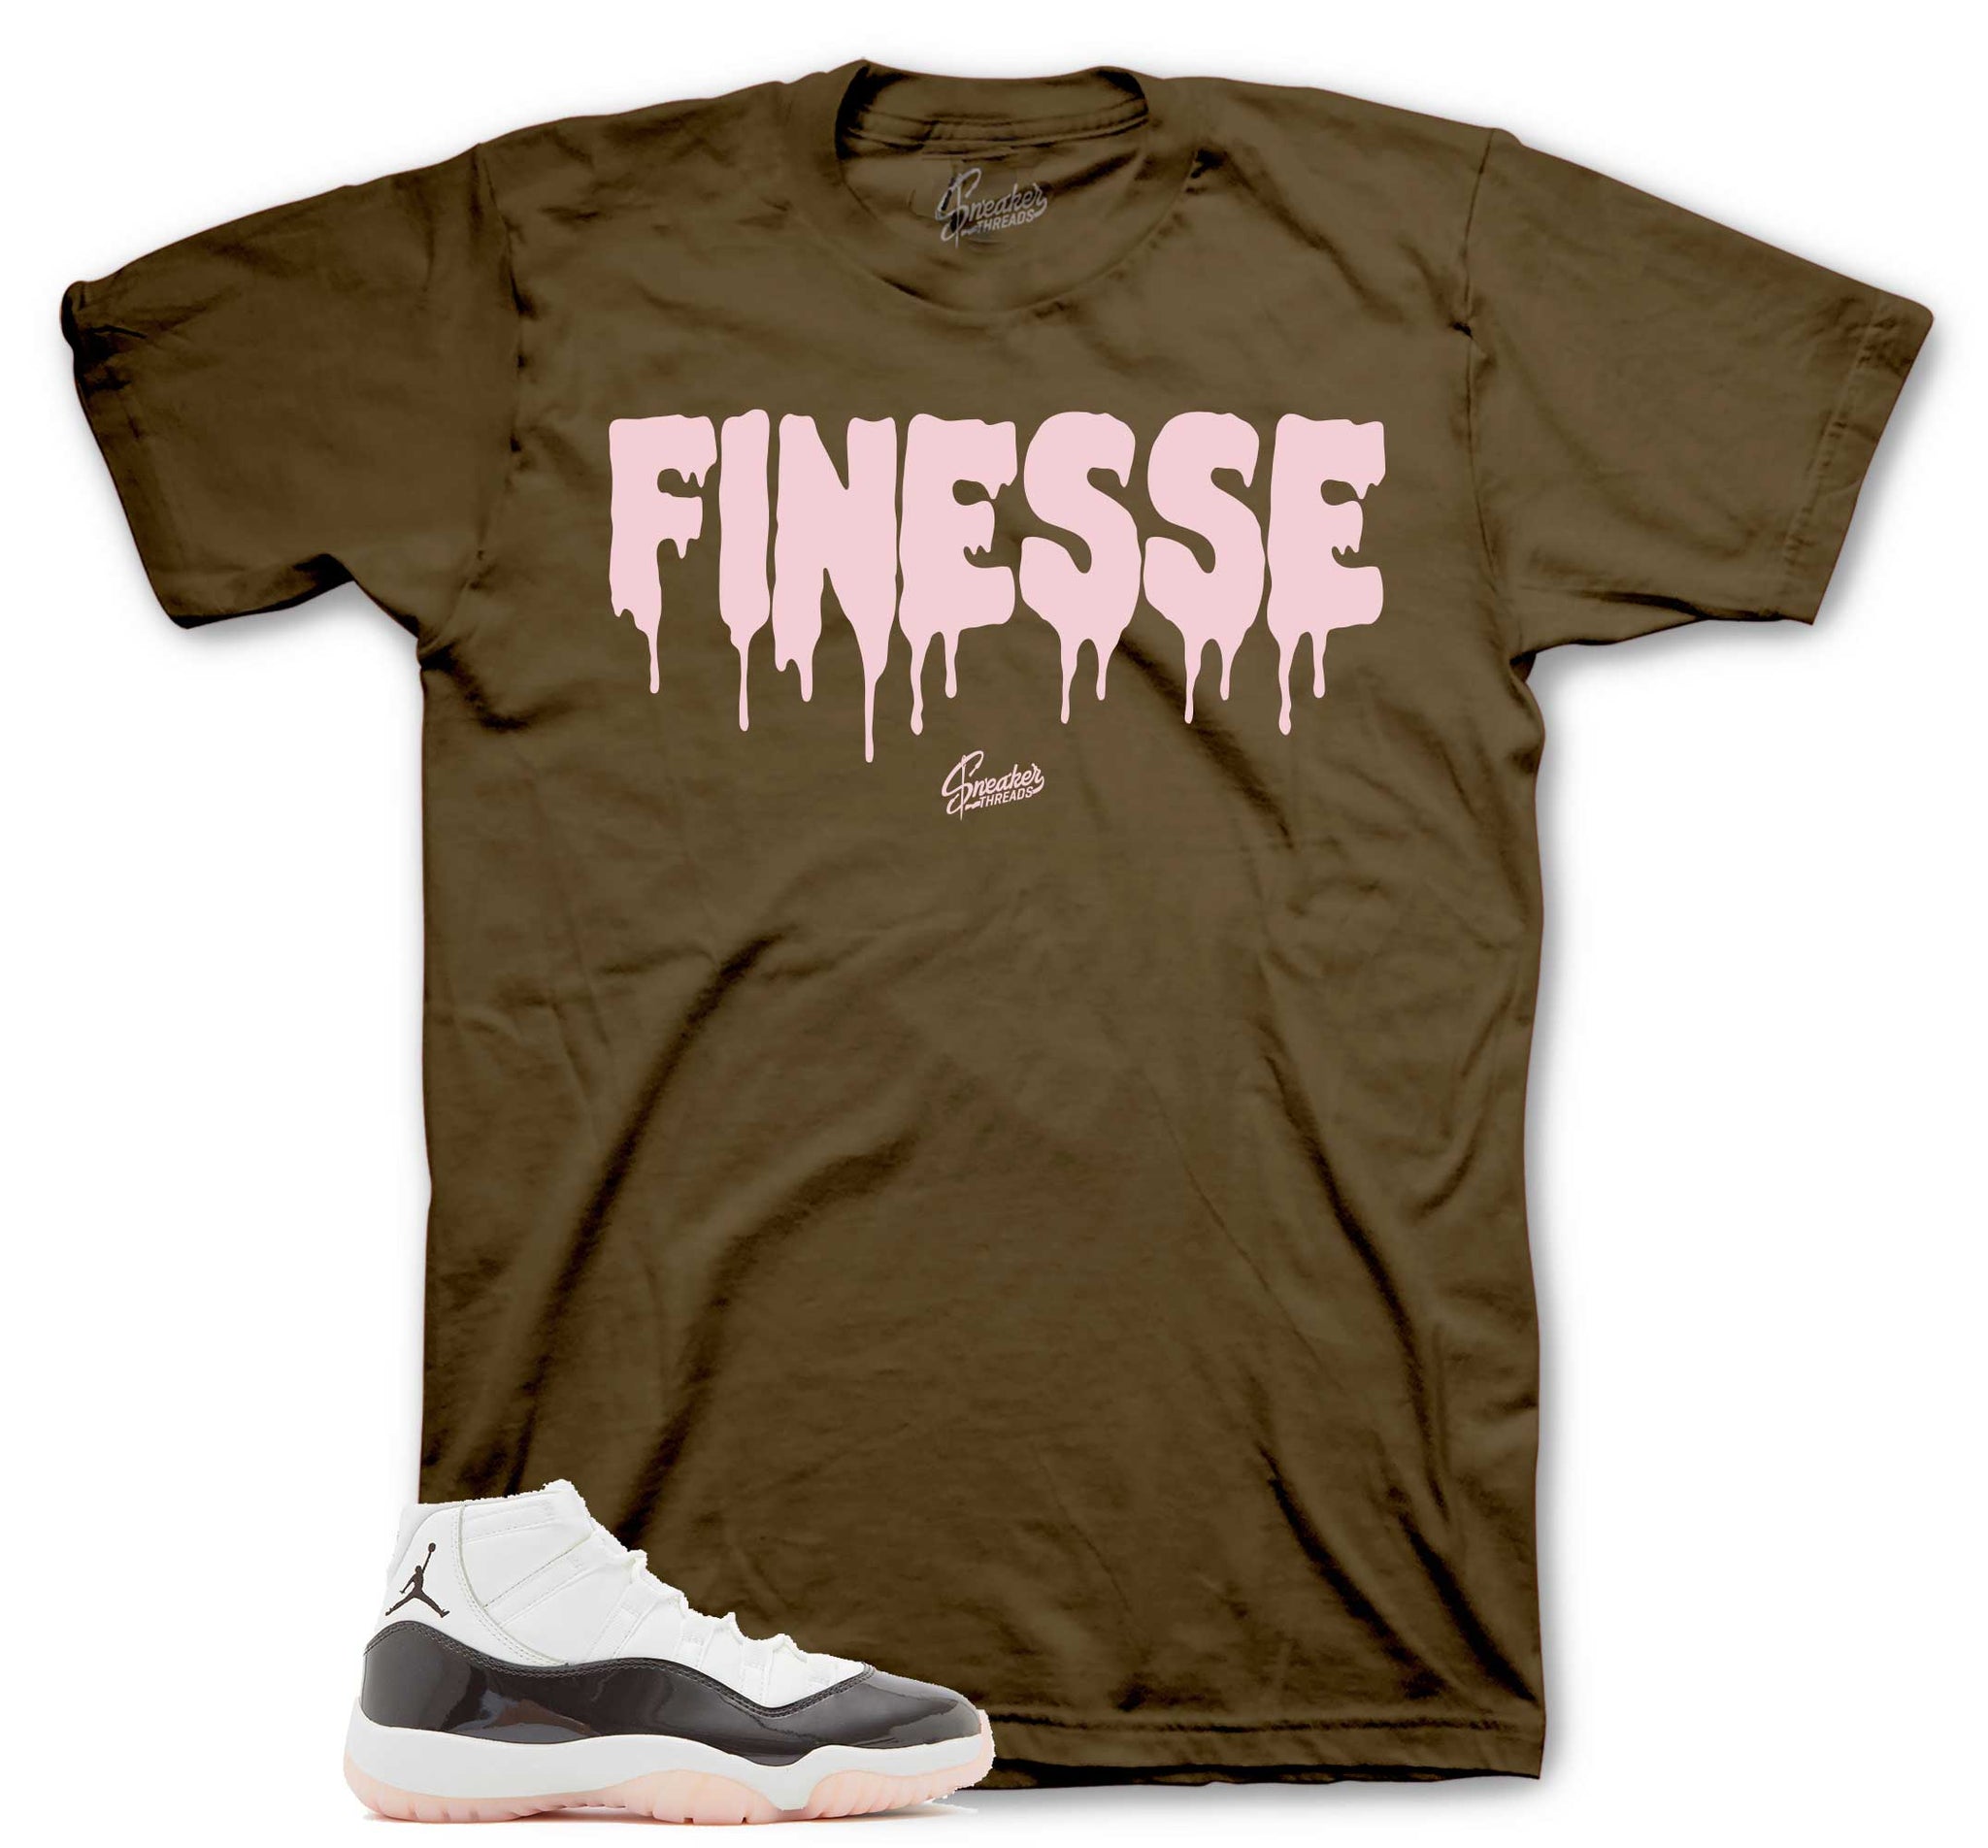 Finesse T-Shirt - Retro 11 Neapolitan Shirt